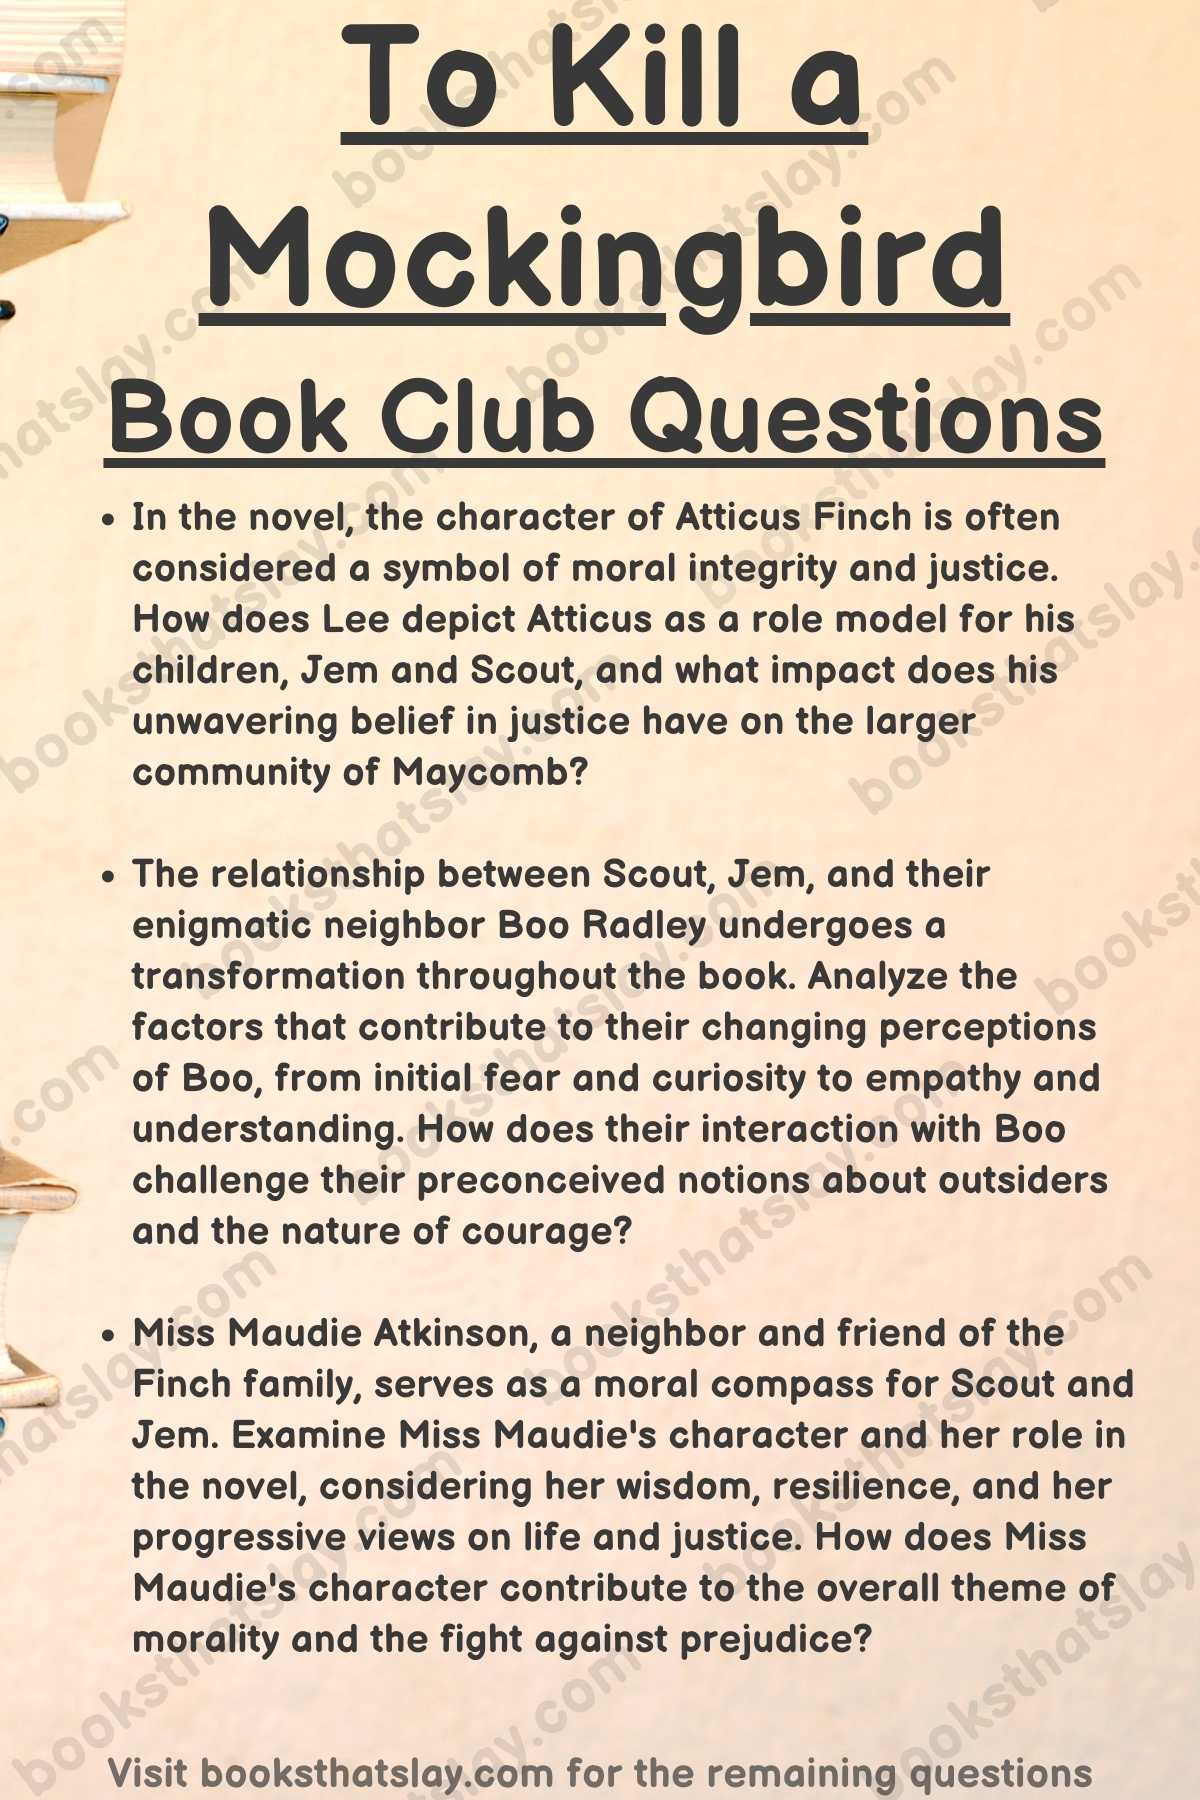 To Kill a Mockingbird Book Club Questions
